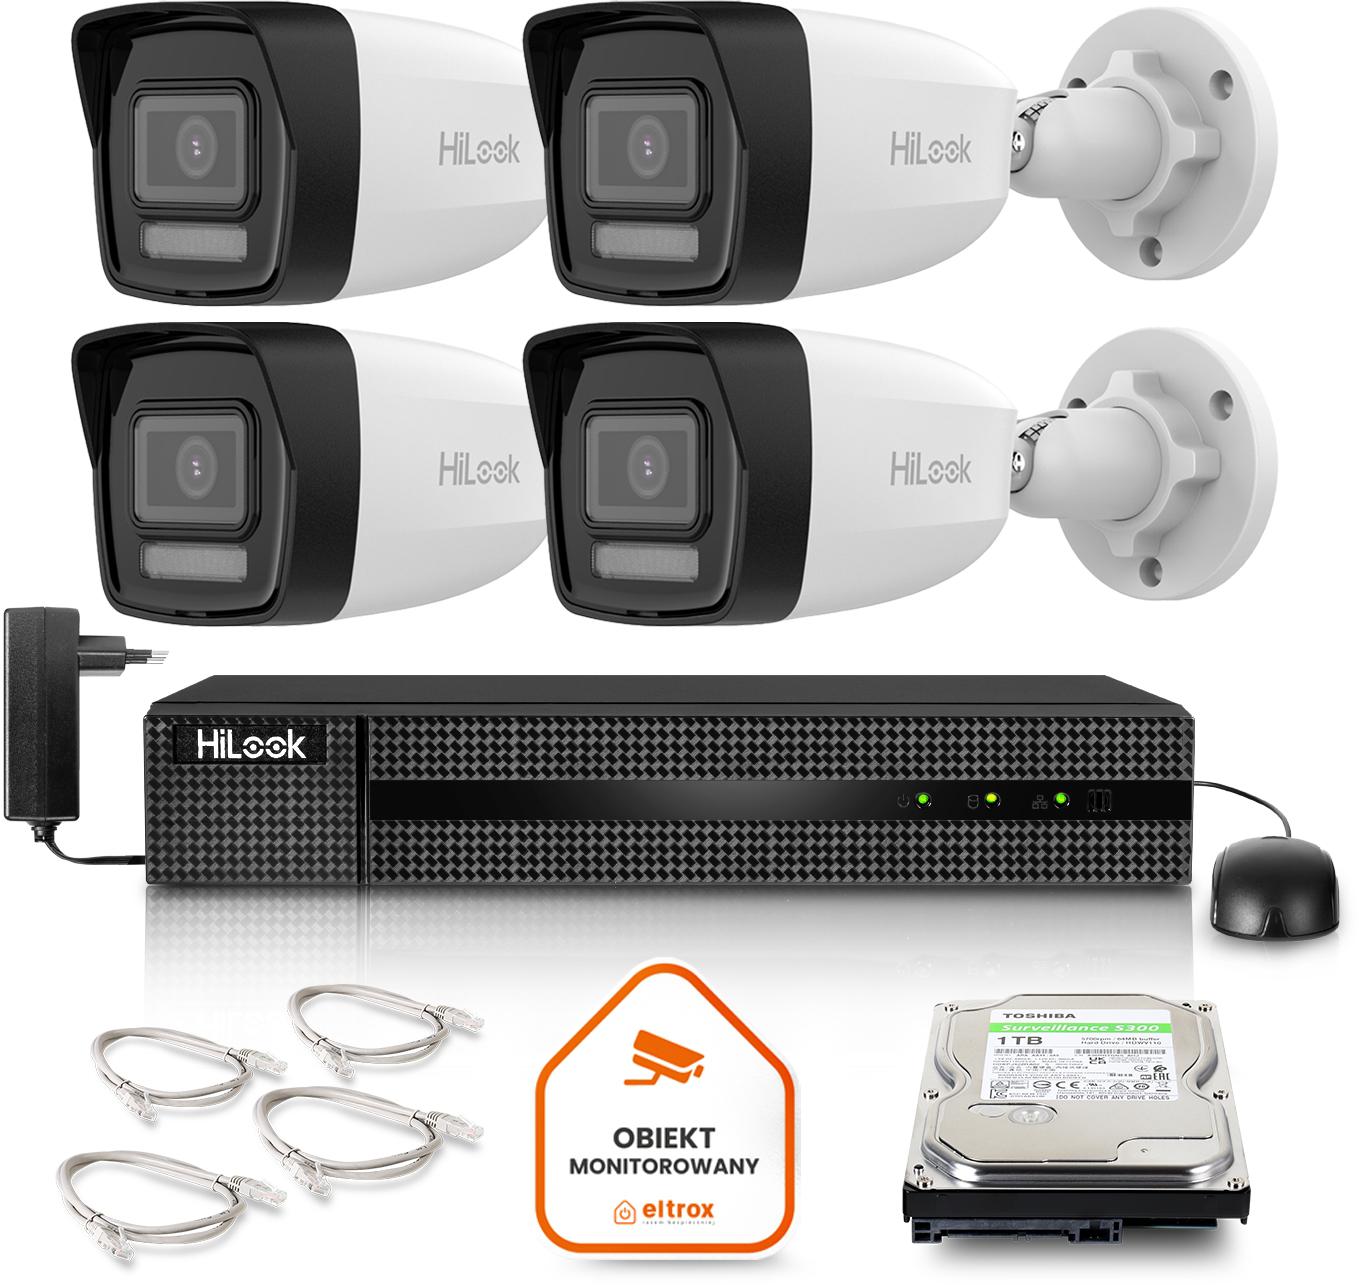 Kompletny zestaw monitoringu Hilook by Hikvision 4 kamer IP, rejestratorem i dyskiem do Twojego domu